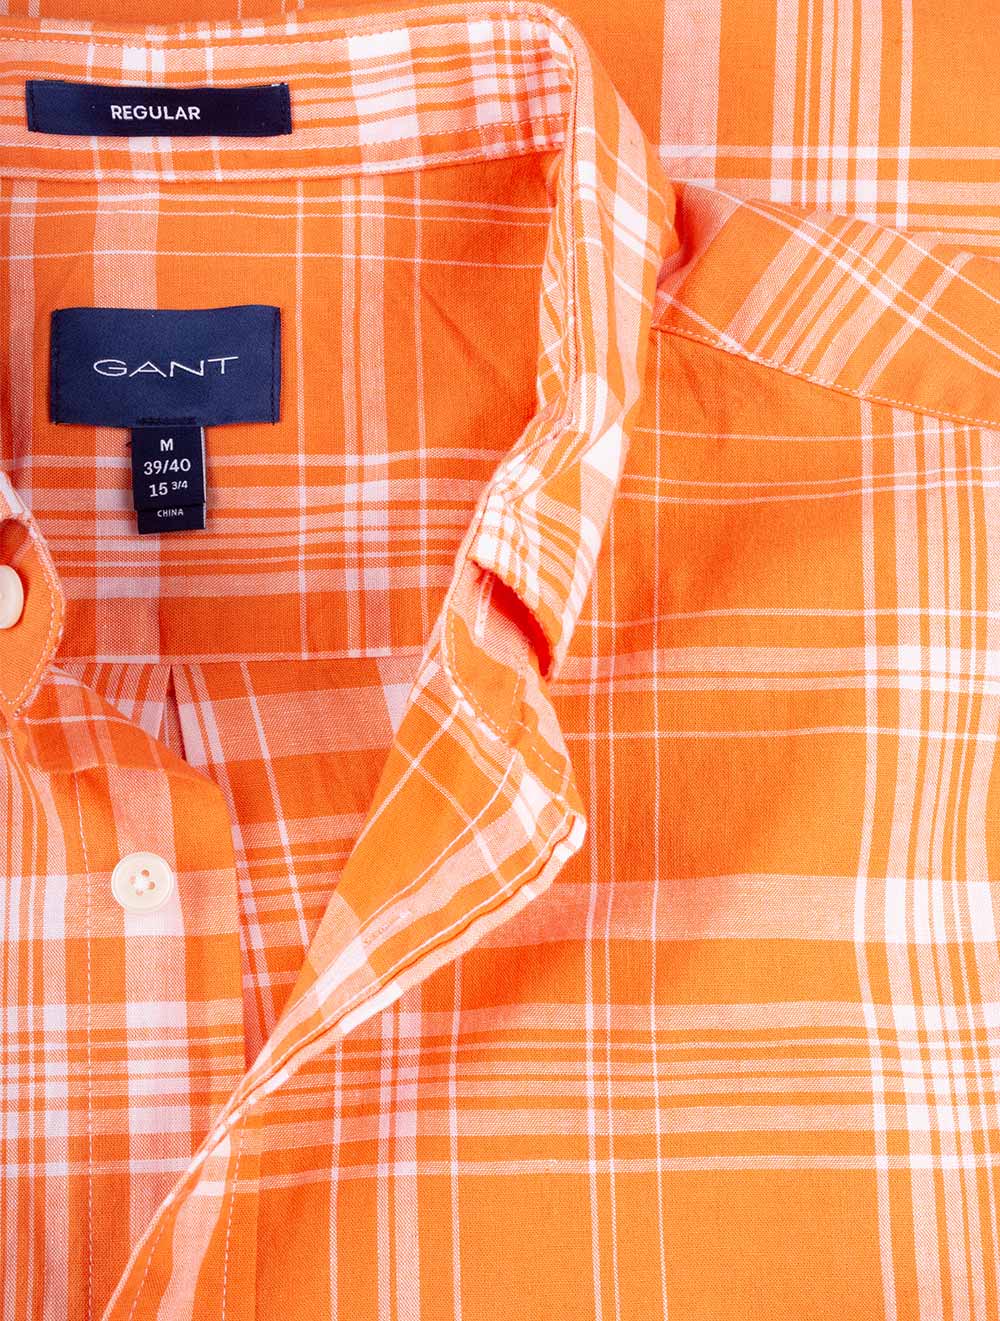 GANT Regular Cotton Linen Short Sleeve Apricot Orange